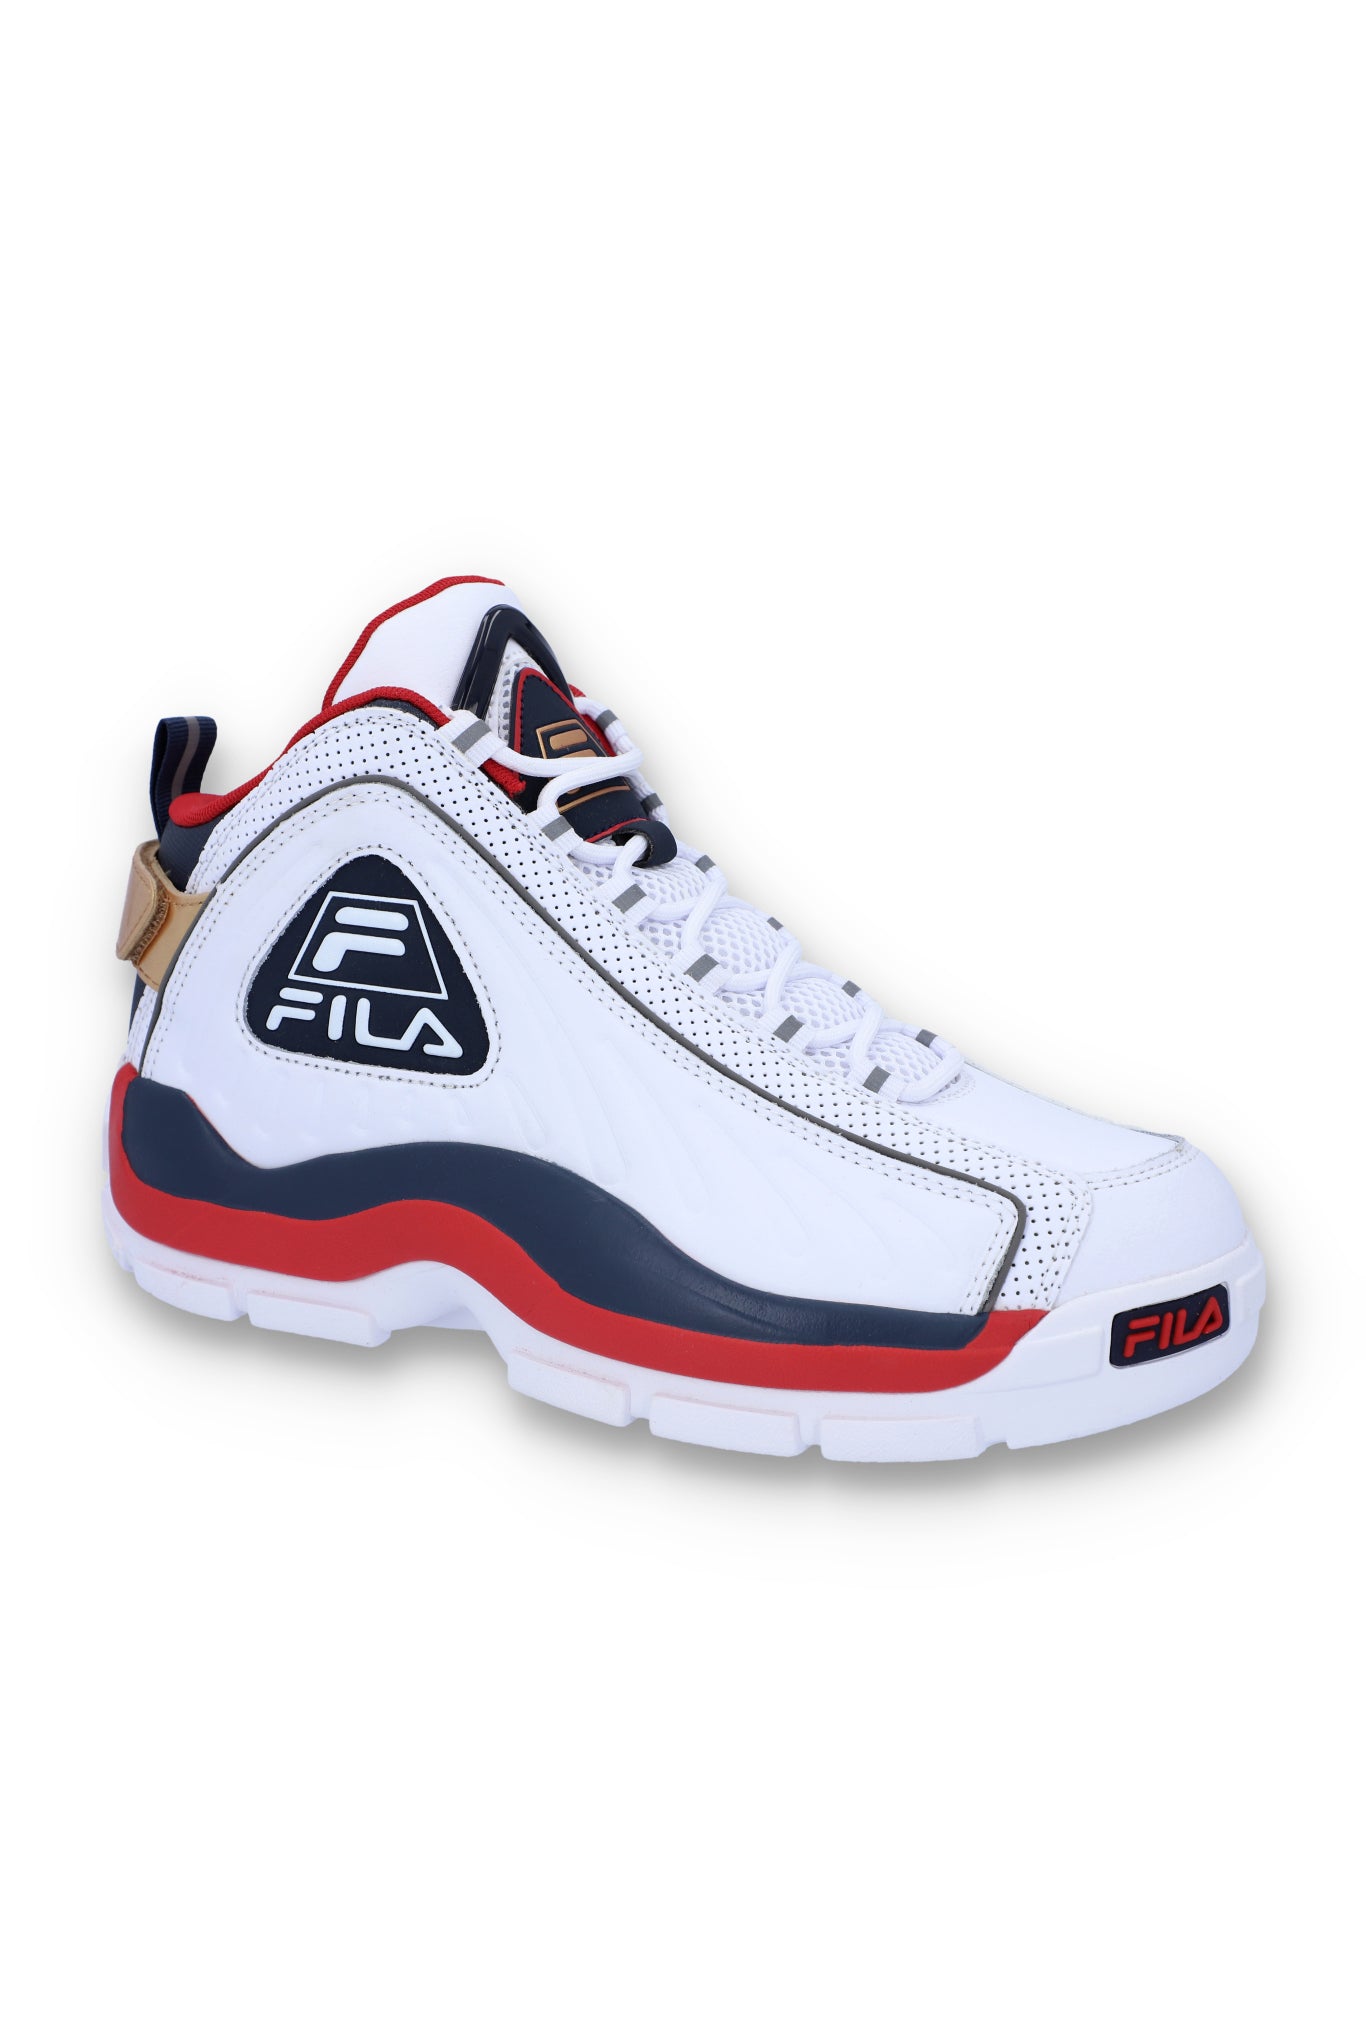 Seguro luego adverbio FILA Men's Trainers & Shoes | The Official FILA UK website – Fila UK